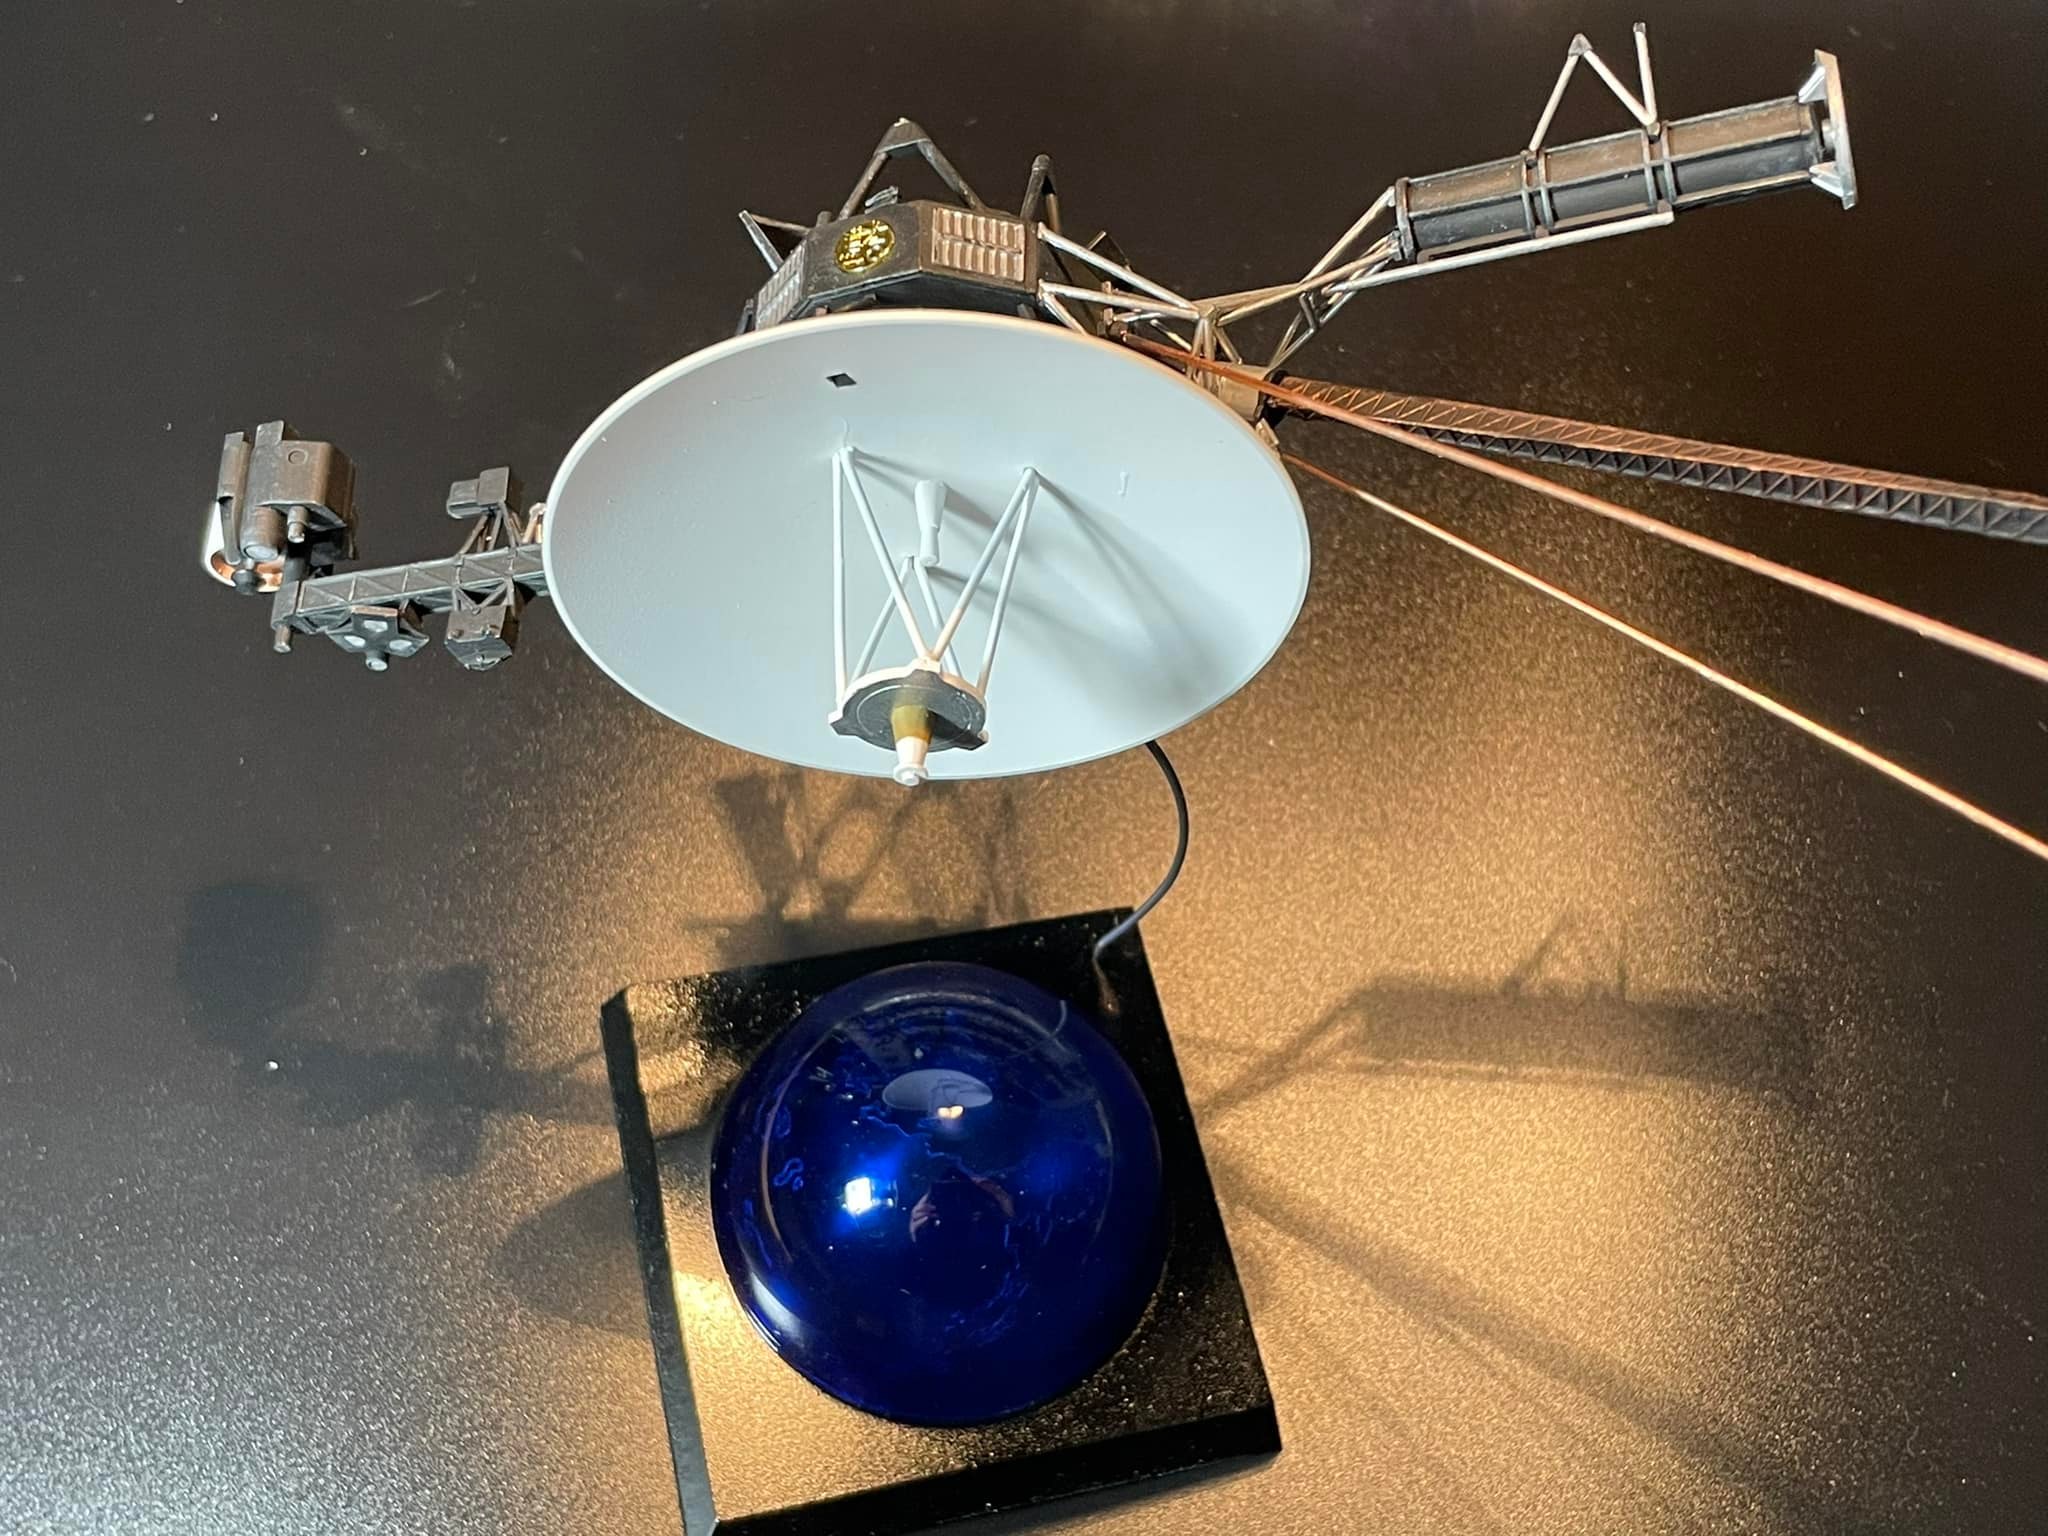 Voyager Probe (Hasegawa 1/48)
